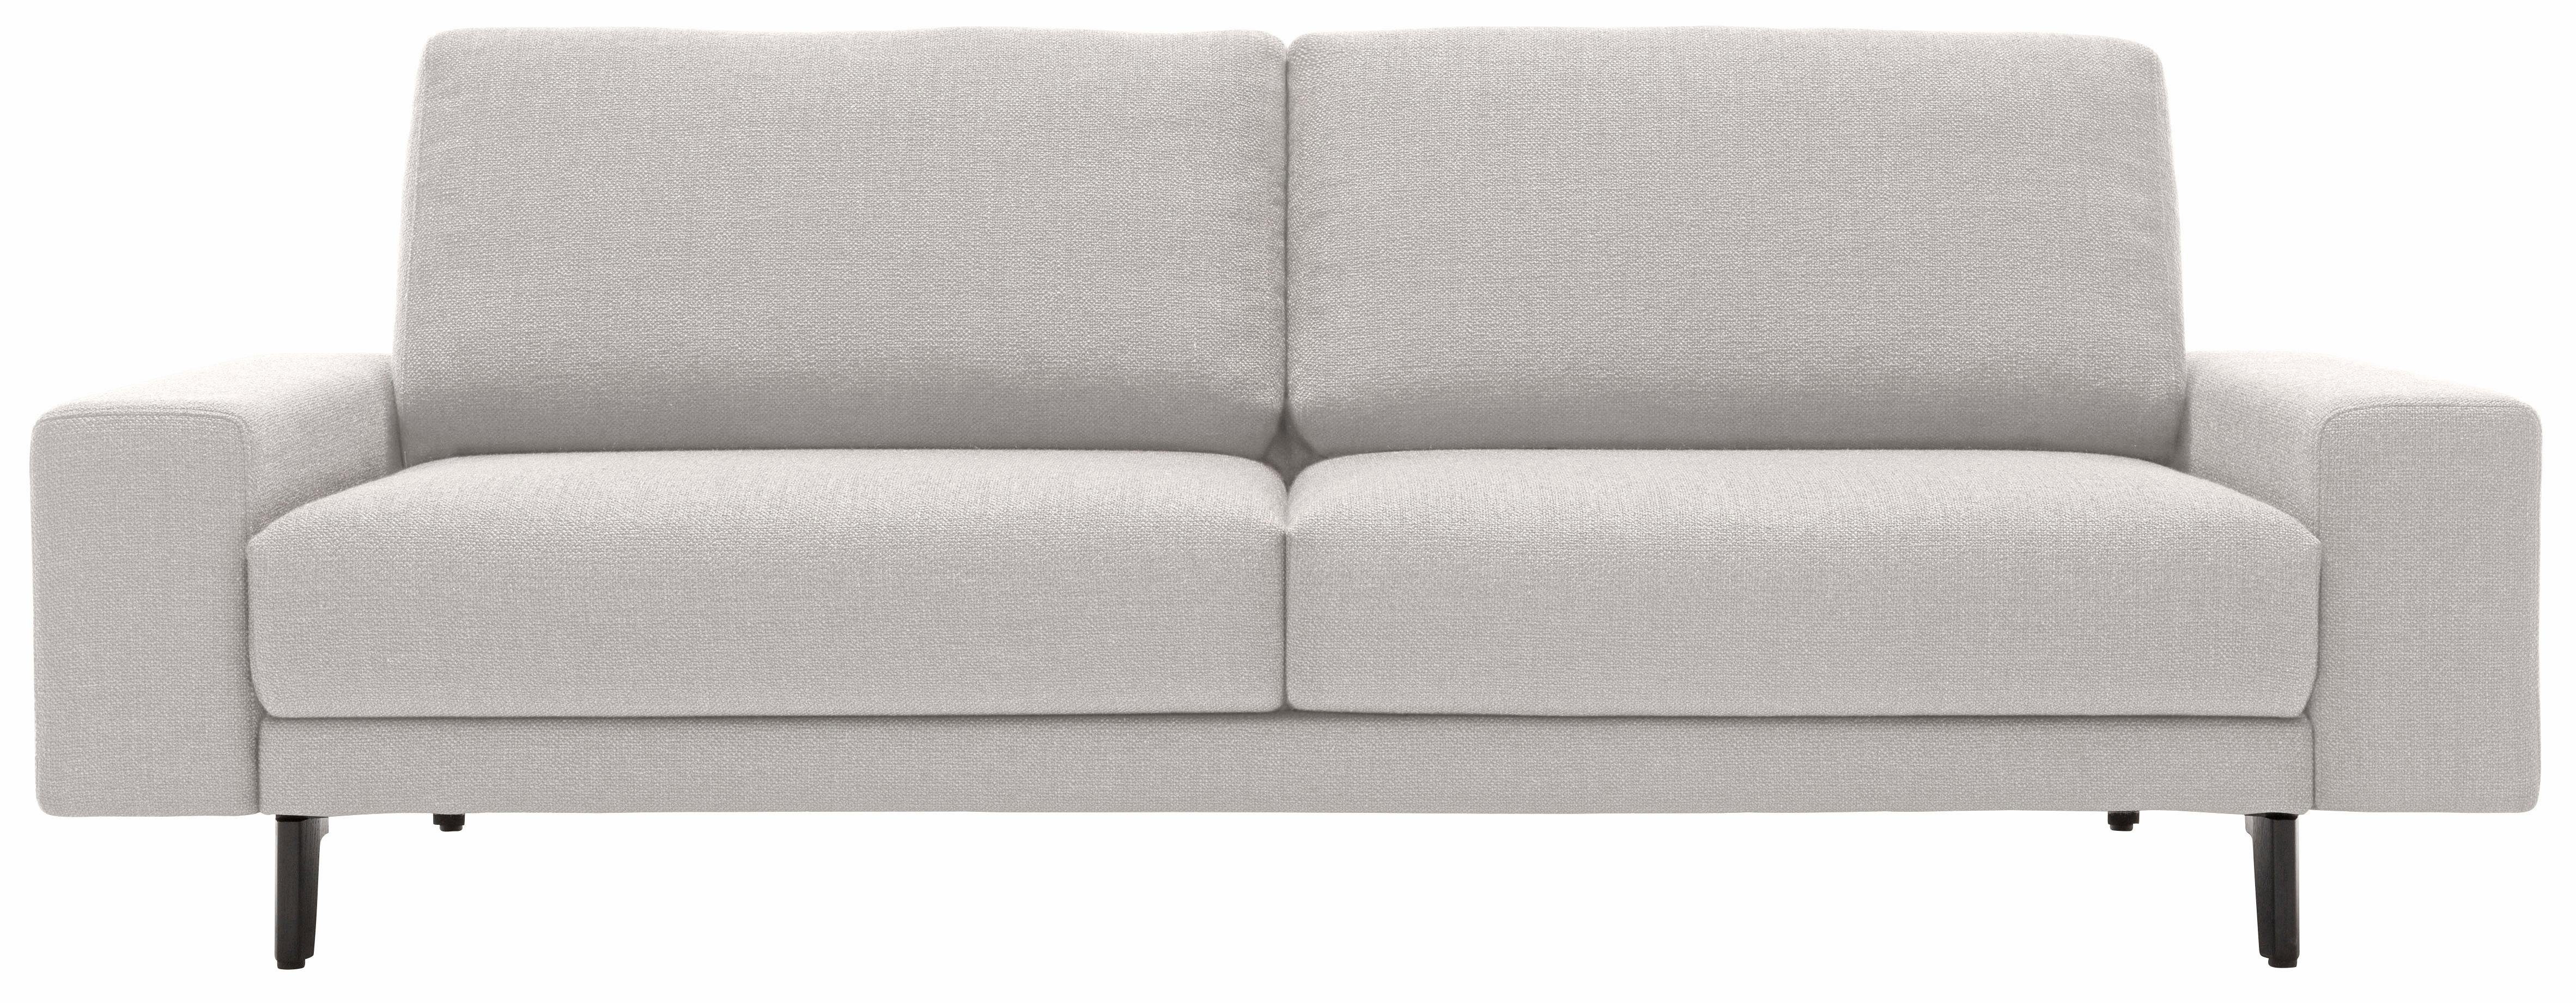 Alugussfüße sofa Breite hülsta cm Armlehne hs.450, 2-Sitzer in breit 180 niedrig, umbragrau,